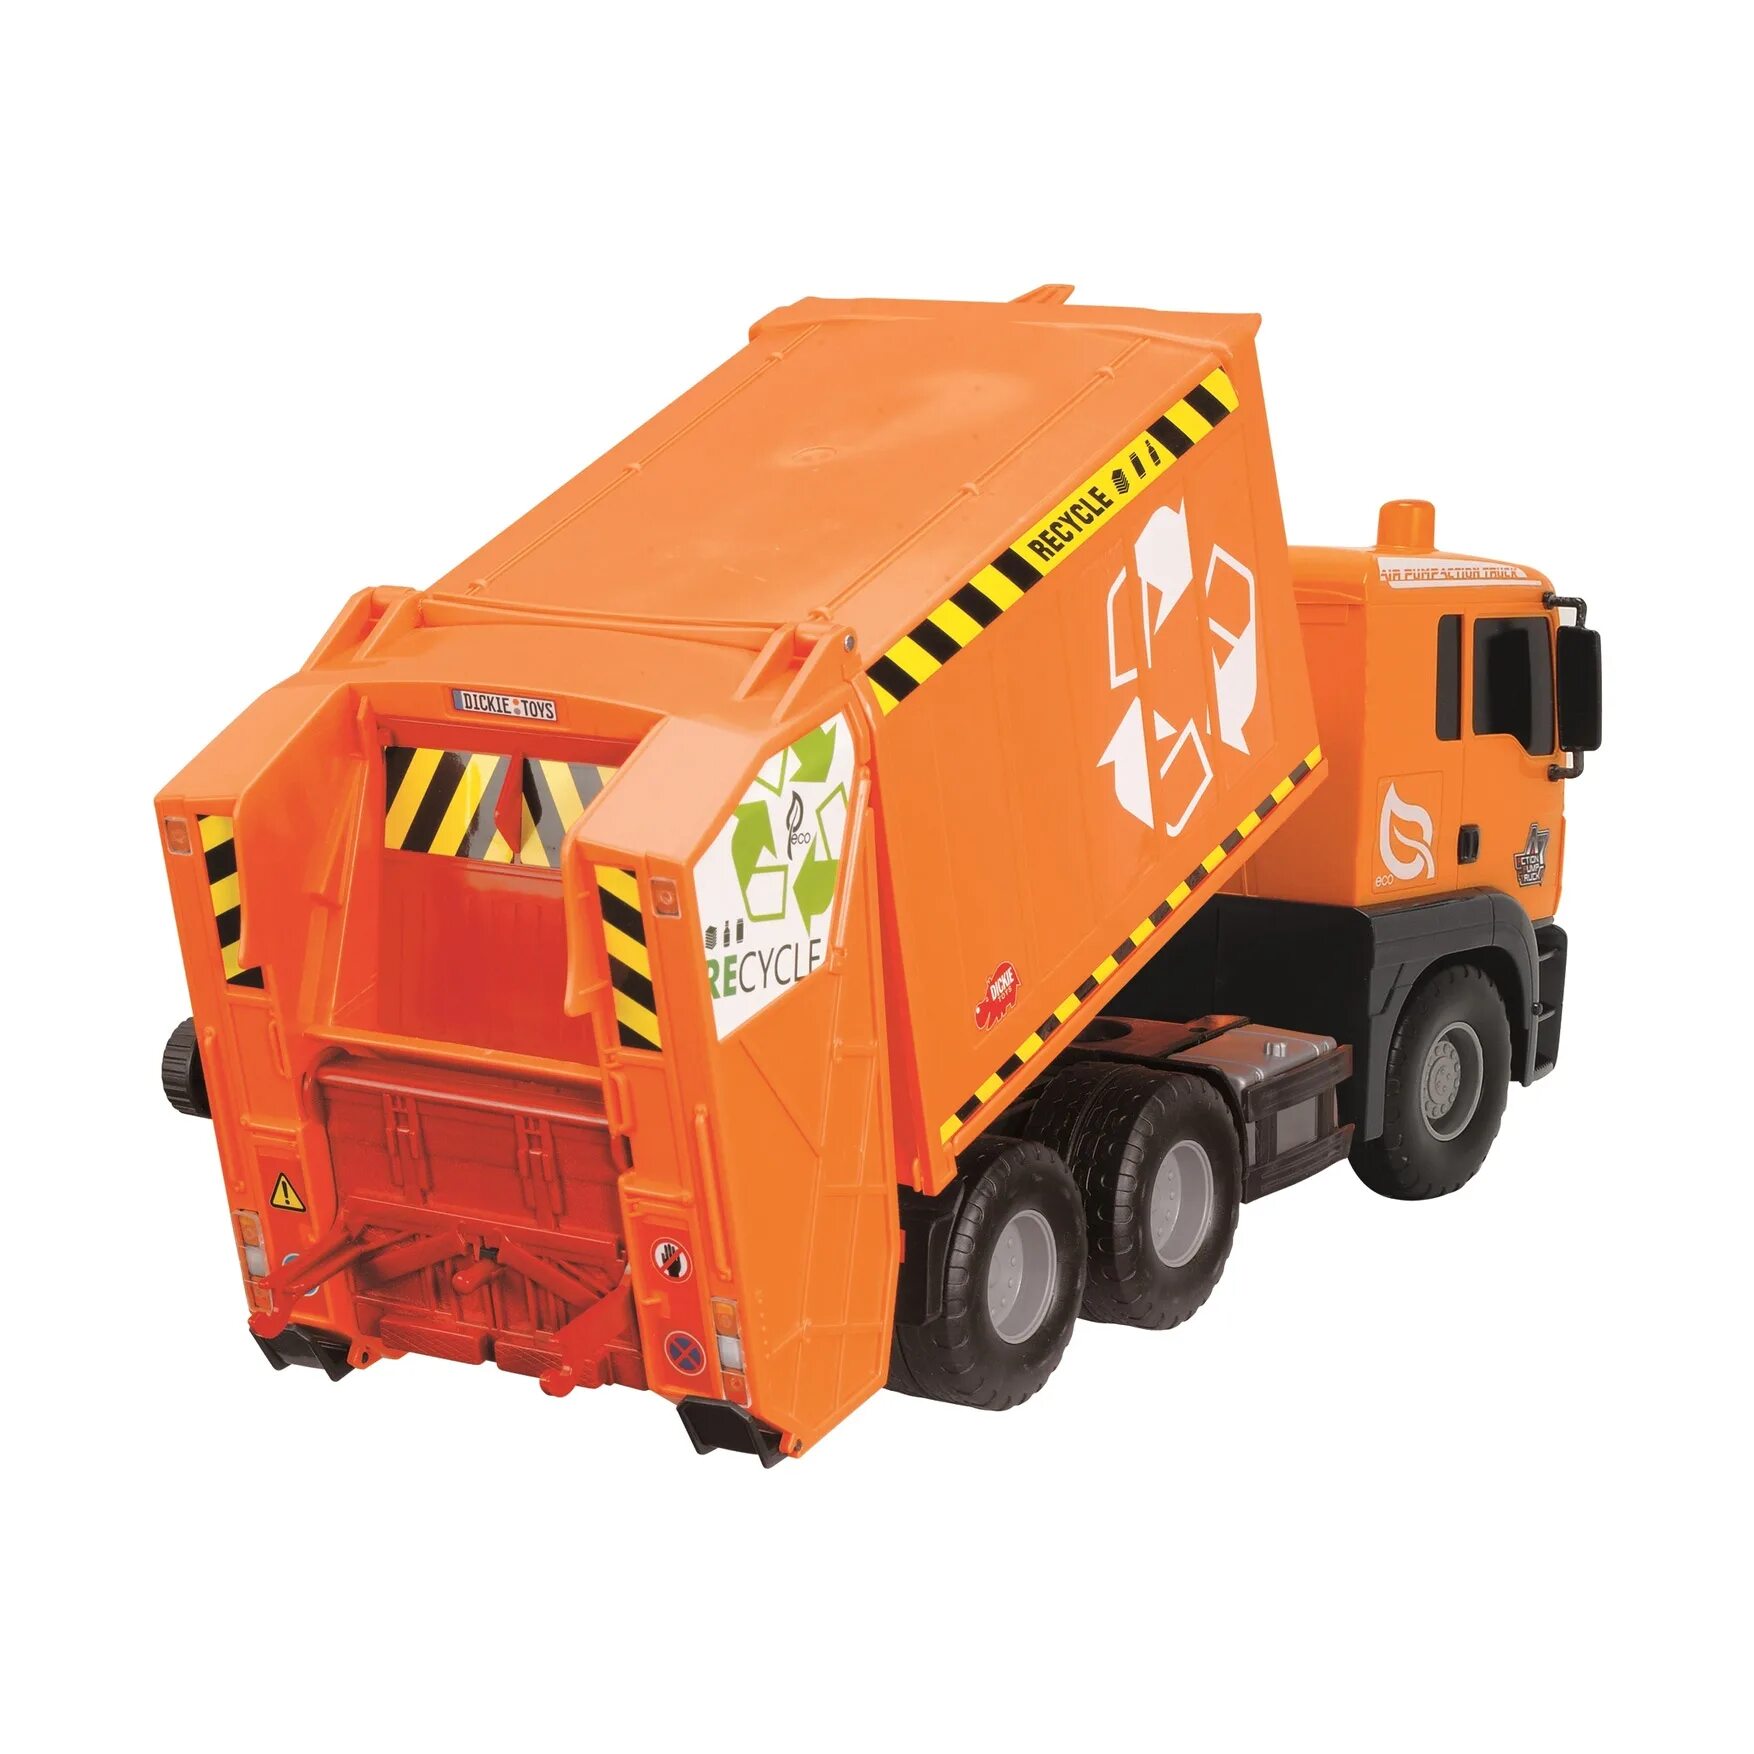 Мусоровоз мальчик. Мусоровоз Dickie Toys Air Pump (3809000) 55 см. Dickie Toys Garbage Truck мусоровоз. Мусоровоз Dickie Toys man (3749024) 55 см. Bruder 03560 мусоровоз Scania.